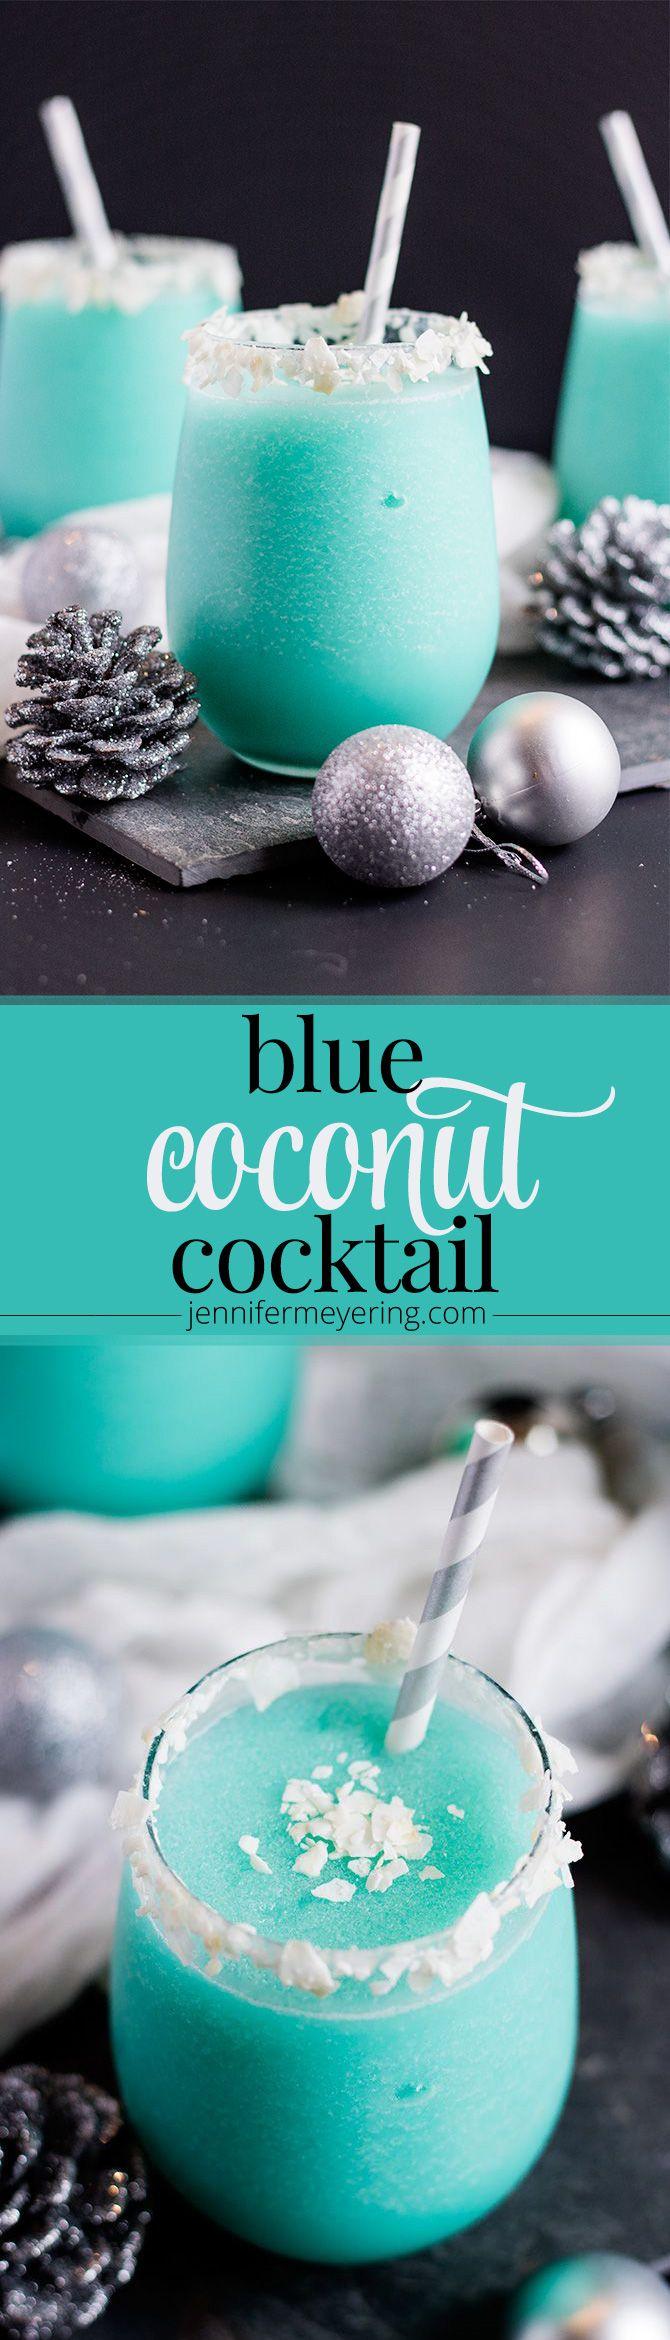 Wedding - Blue Coconut Cocktail